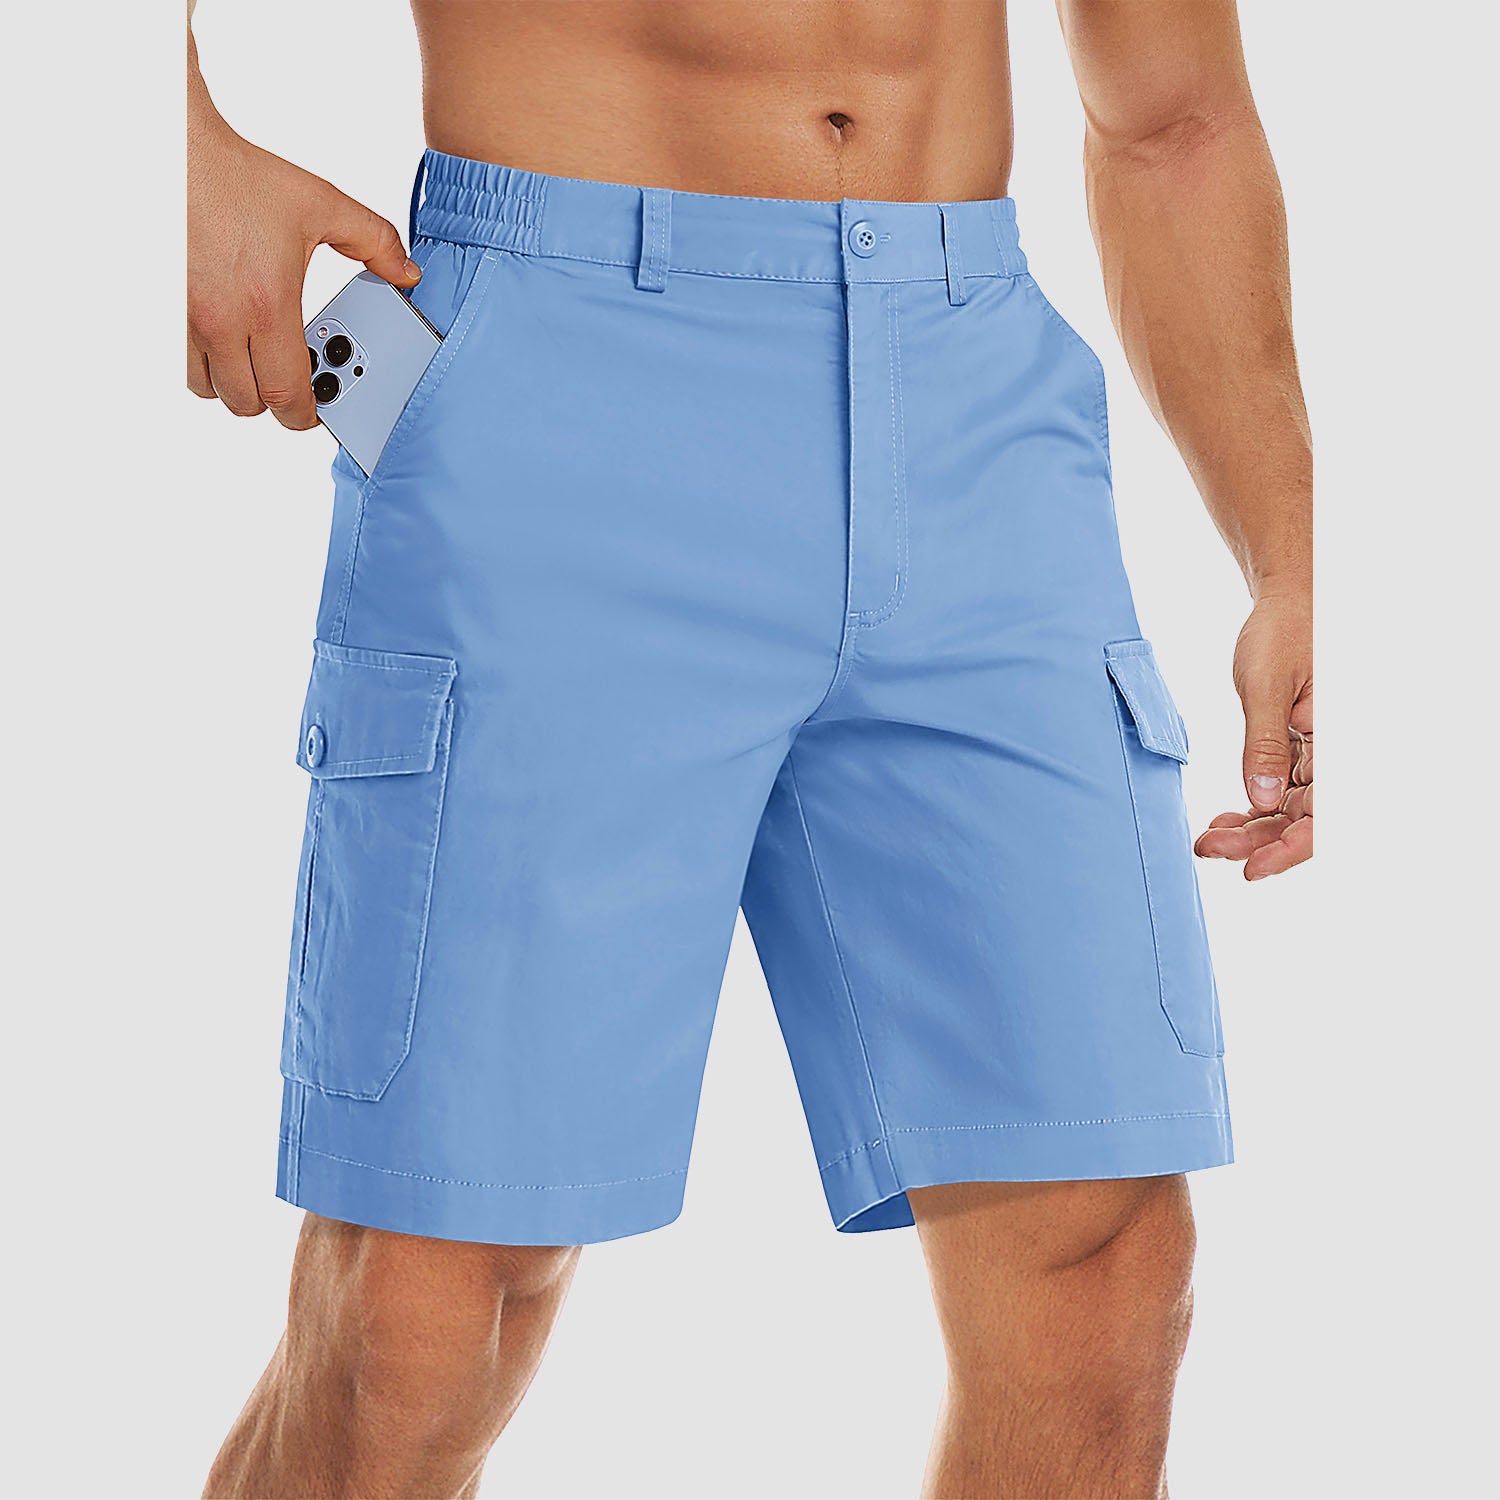 【Buy 4 Get 4th Free】Men's Cargo Shorts Casaul Work Shorts